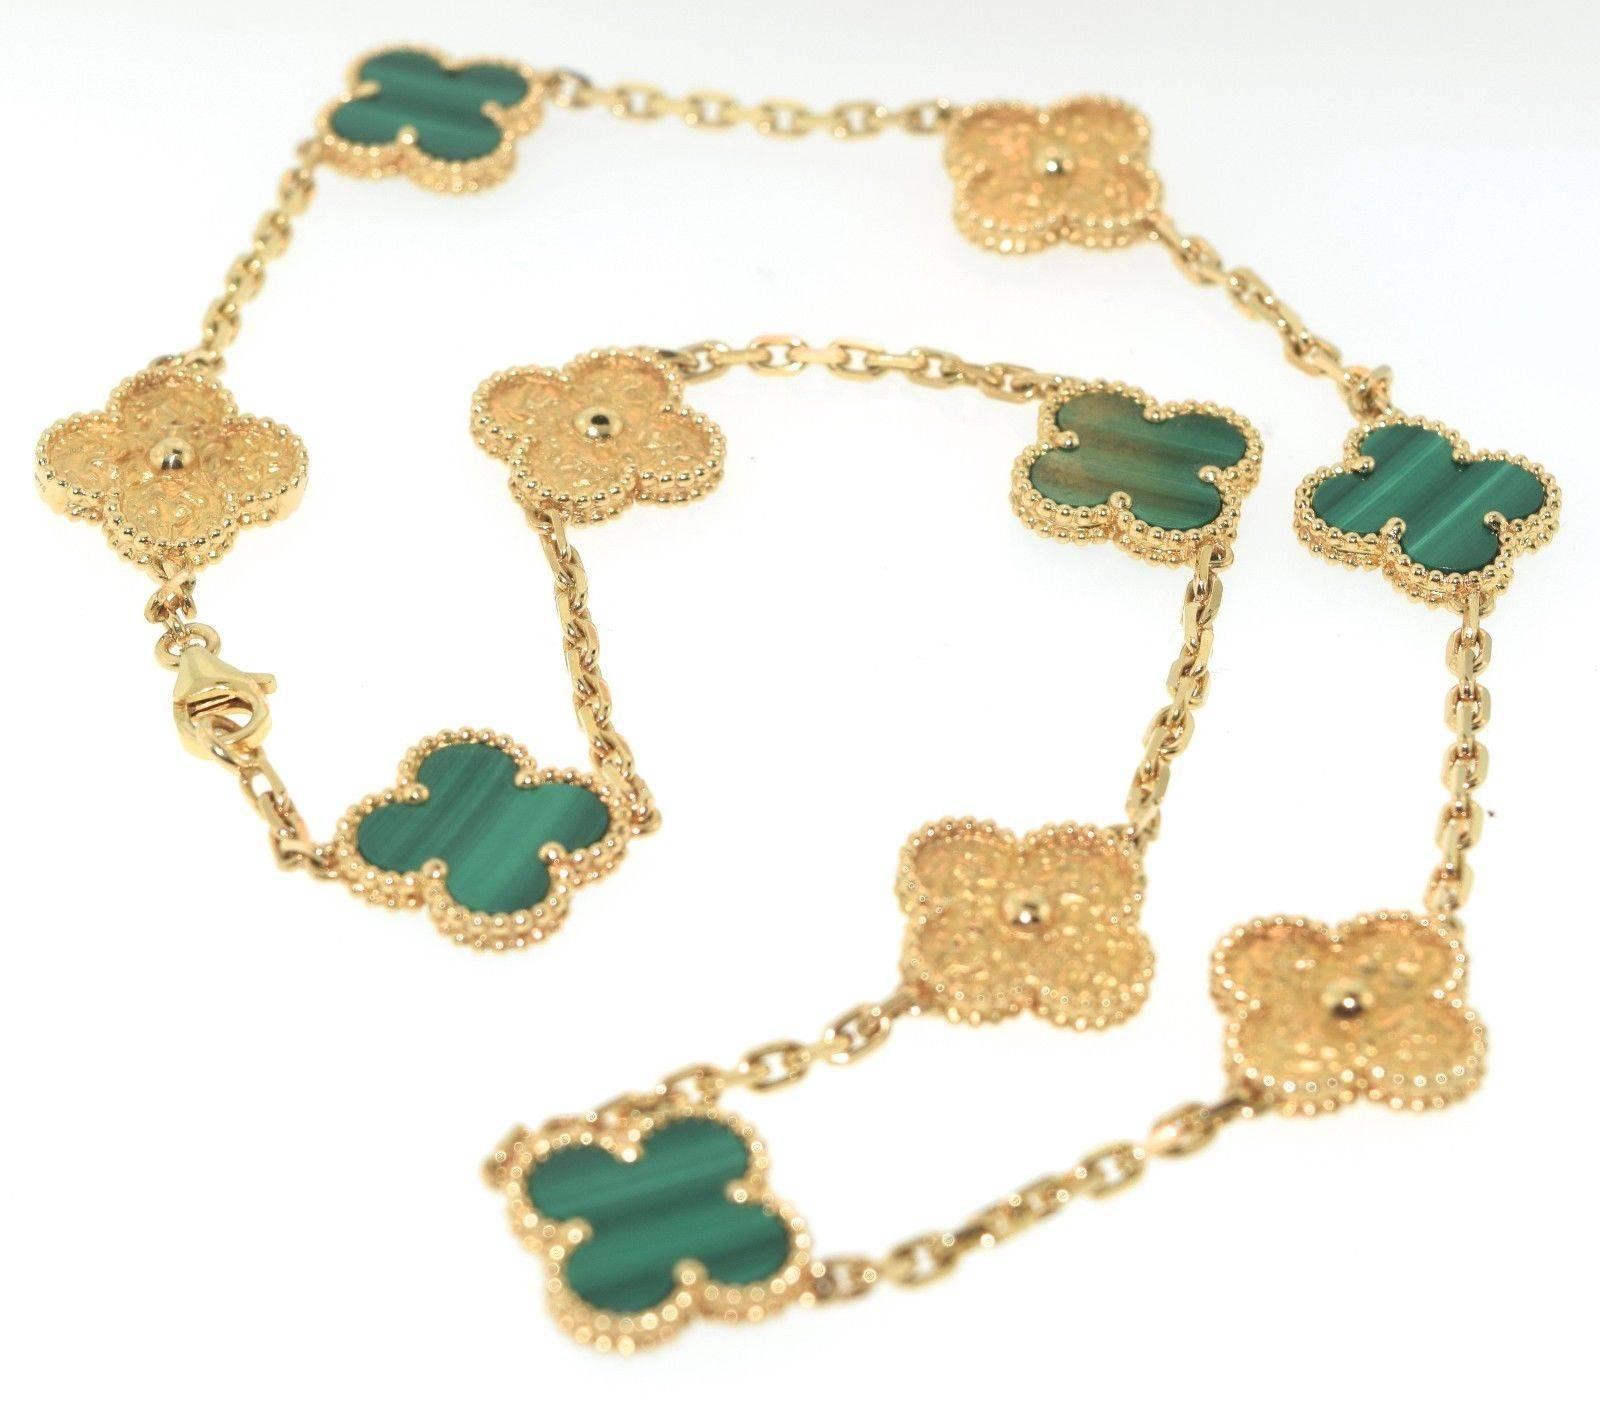 Van Cleef & Arpels Special Edition Alhambra Necklace 10 Motif Necklace For Sale 2